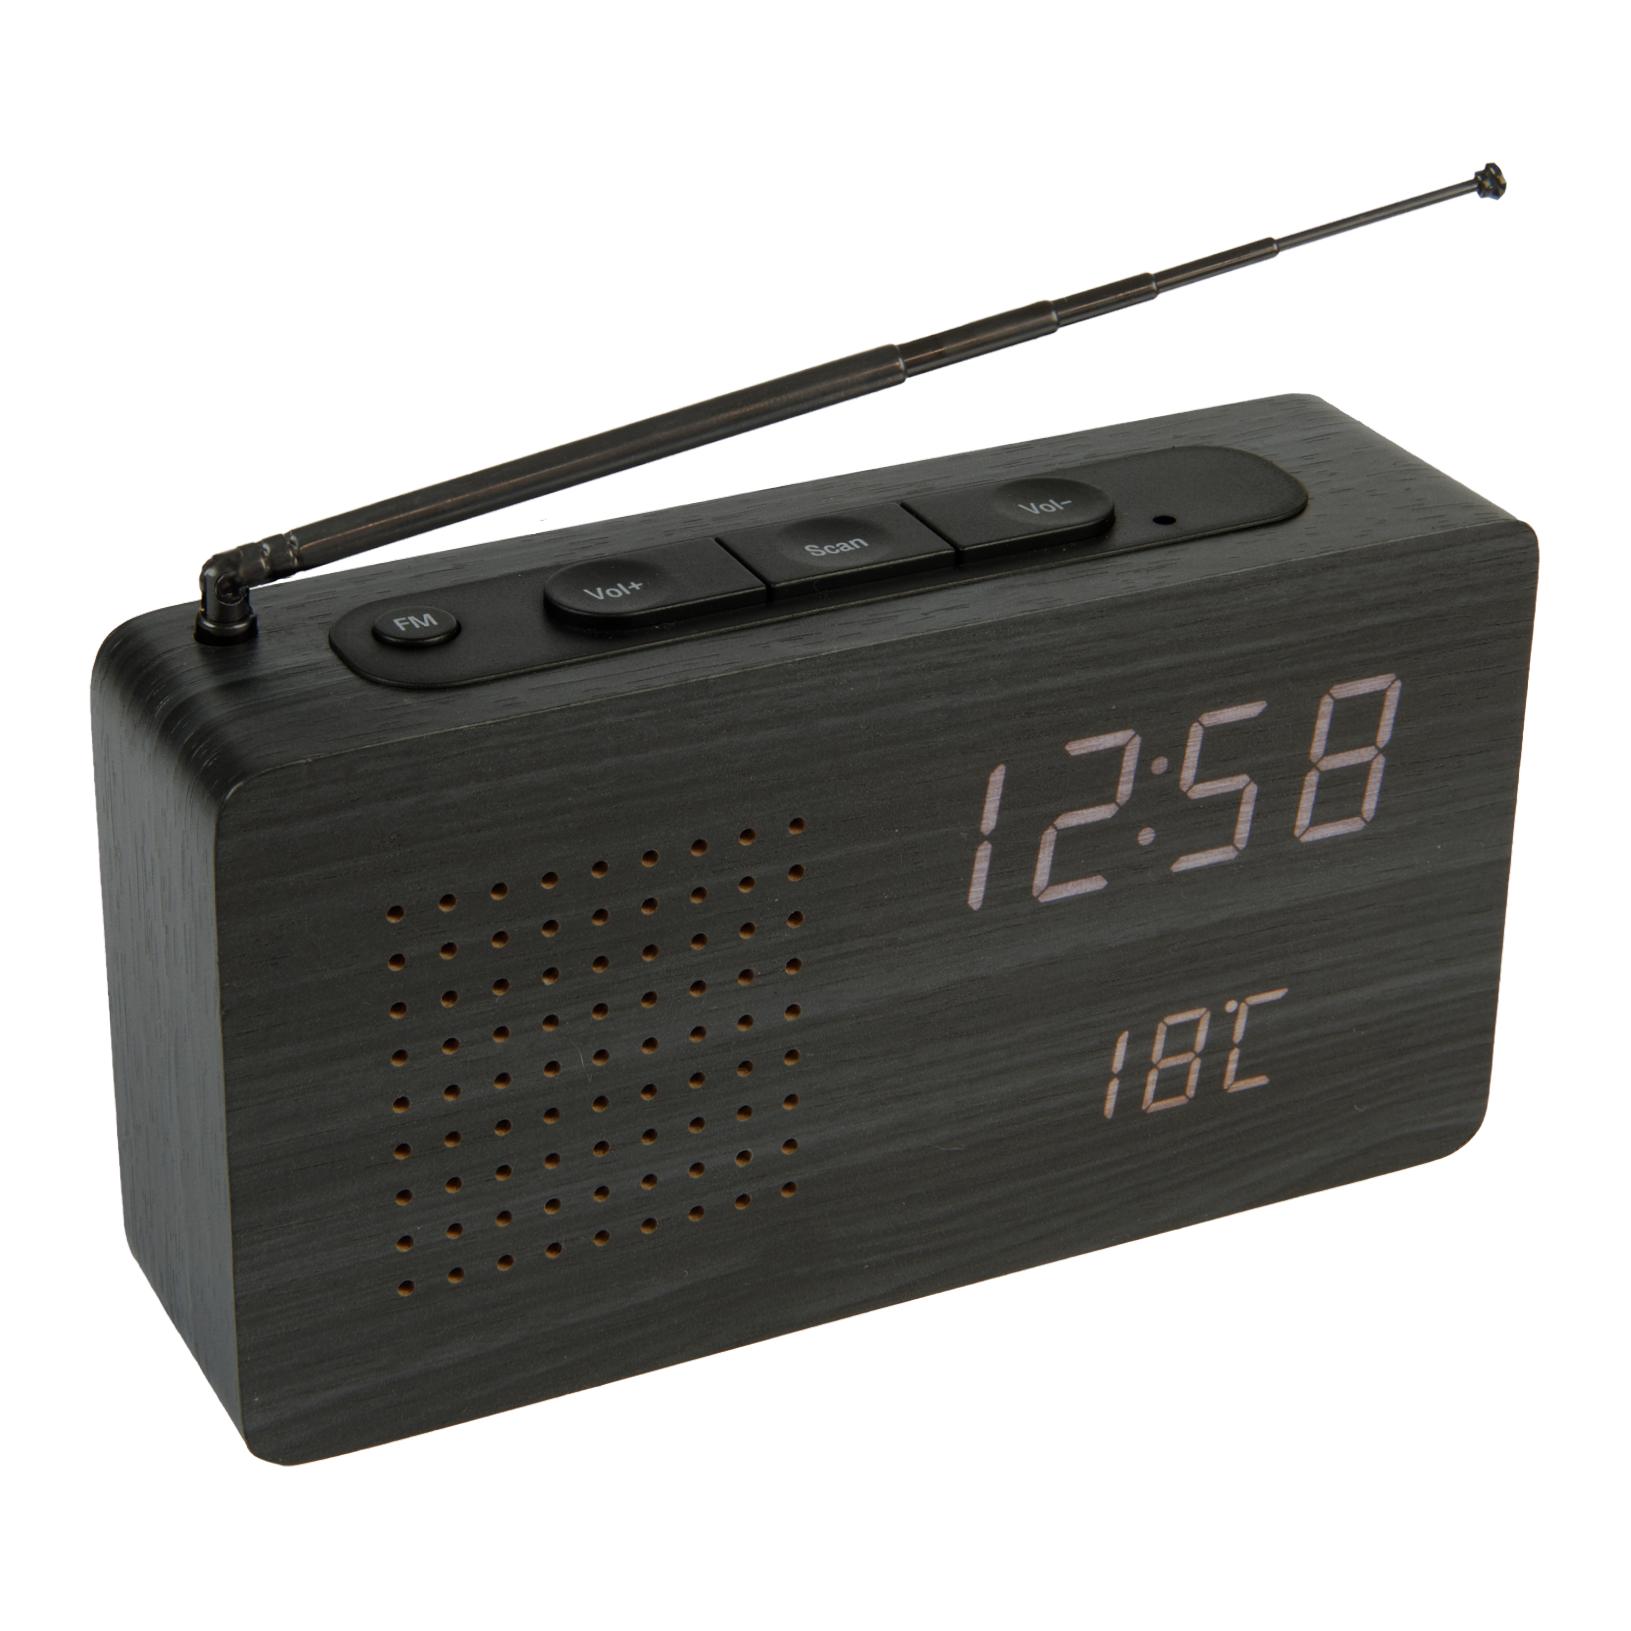 Fisura – Radio despertador reloj negra. Radio portátil de sobremesa. Reloj  despertador digital con radio 17,7 x 4,5 x 9 cm. Material: Madera.